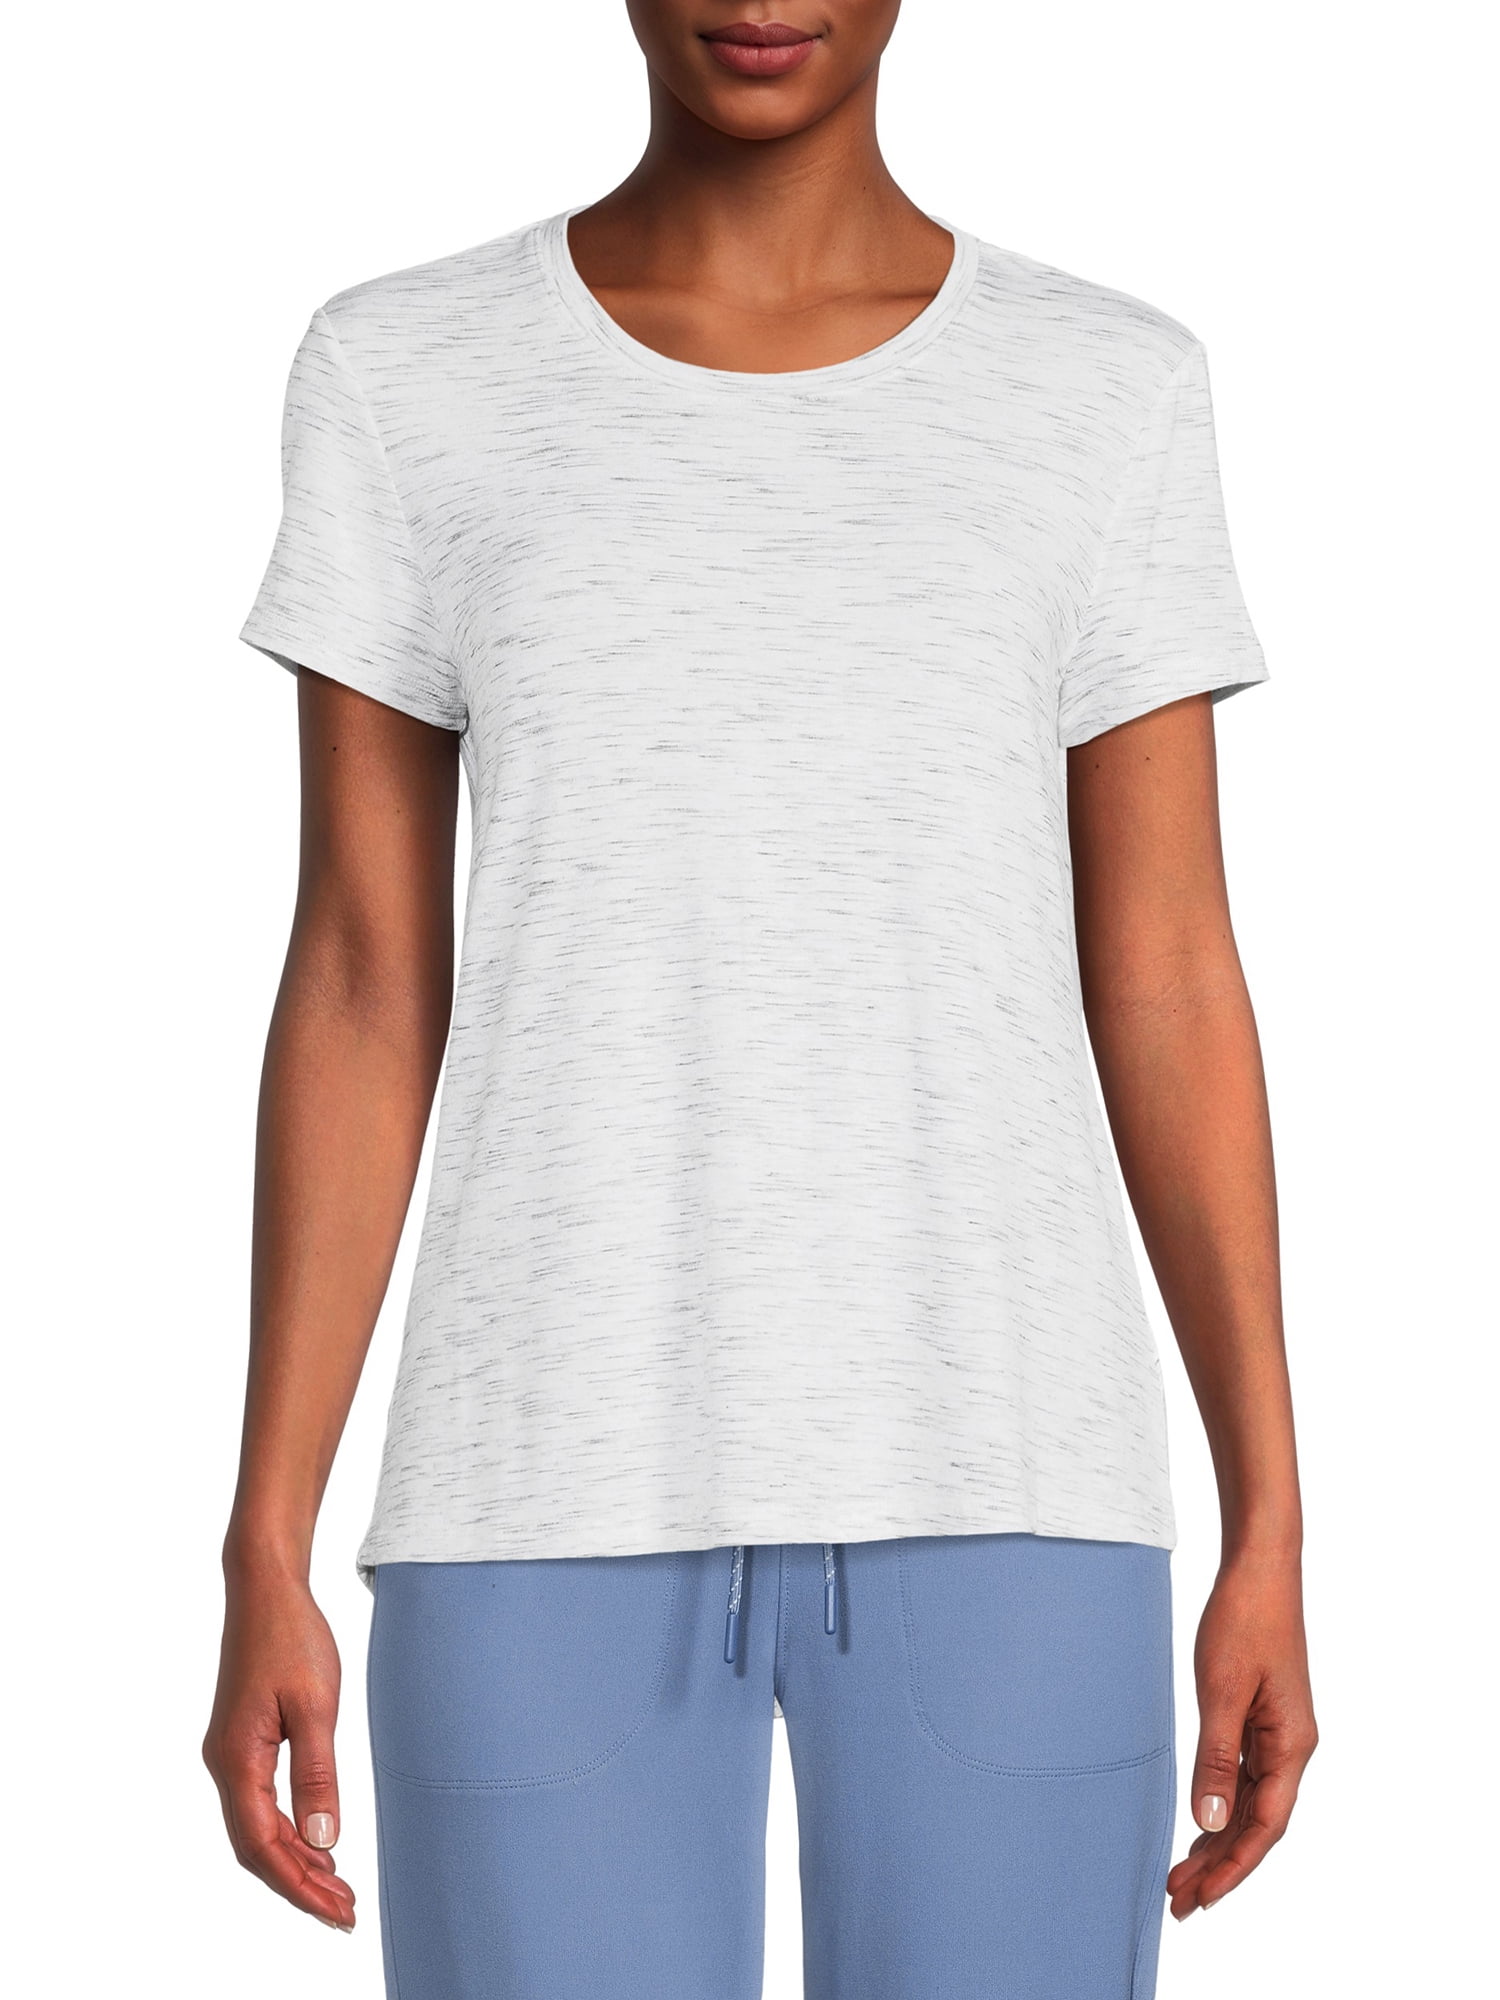 Avia Women's Active T-Shirt with Short Sleeves - Walmart.com